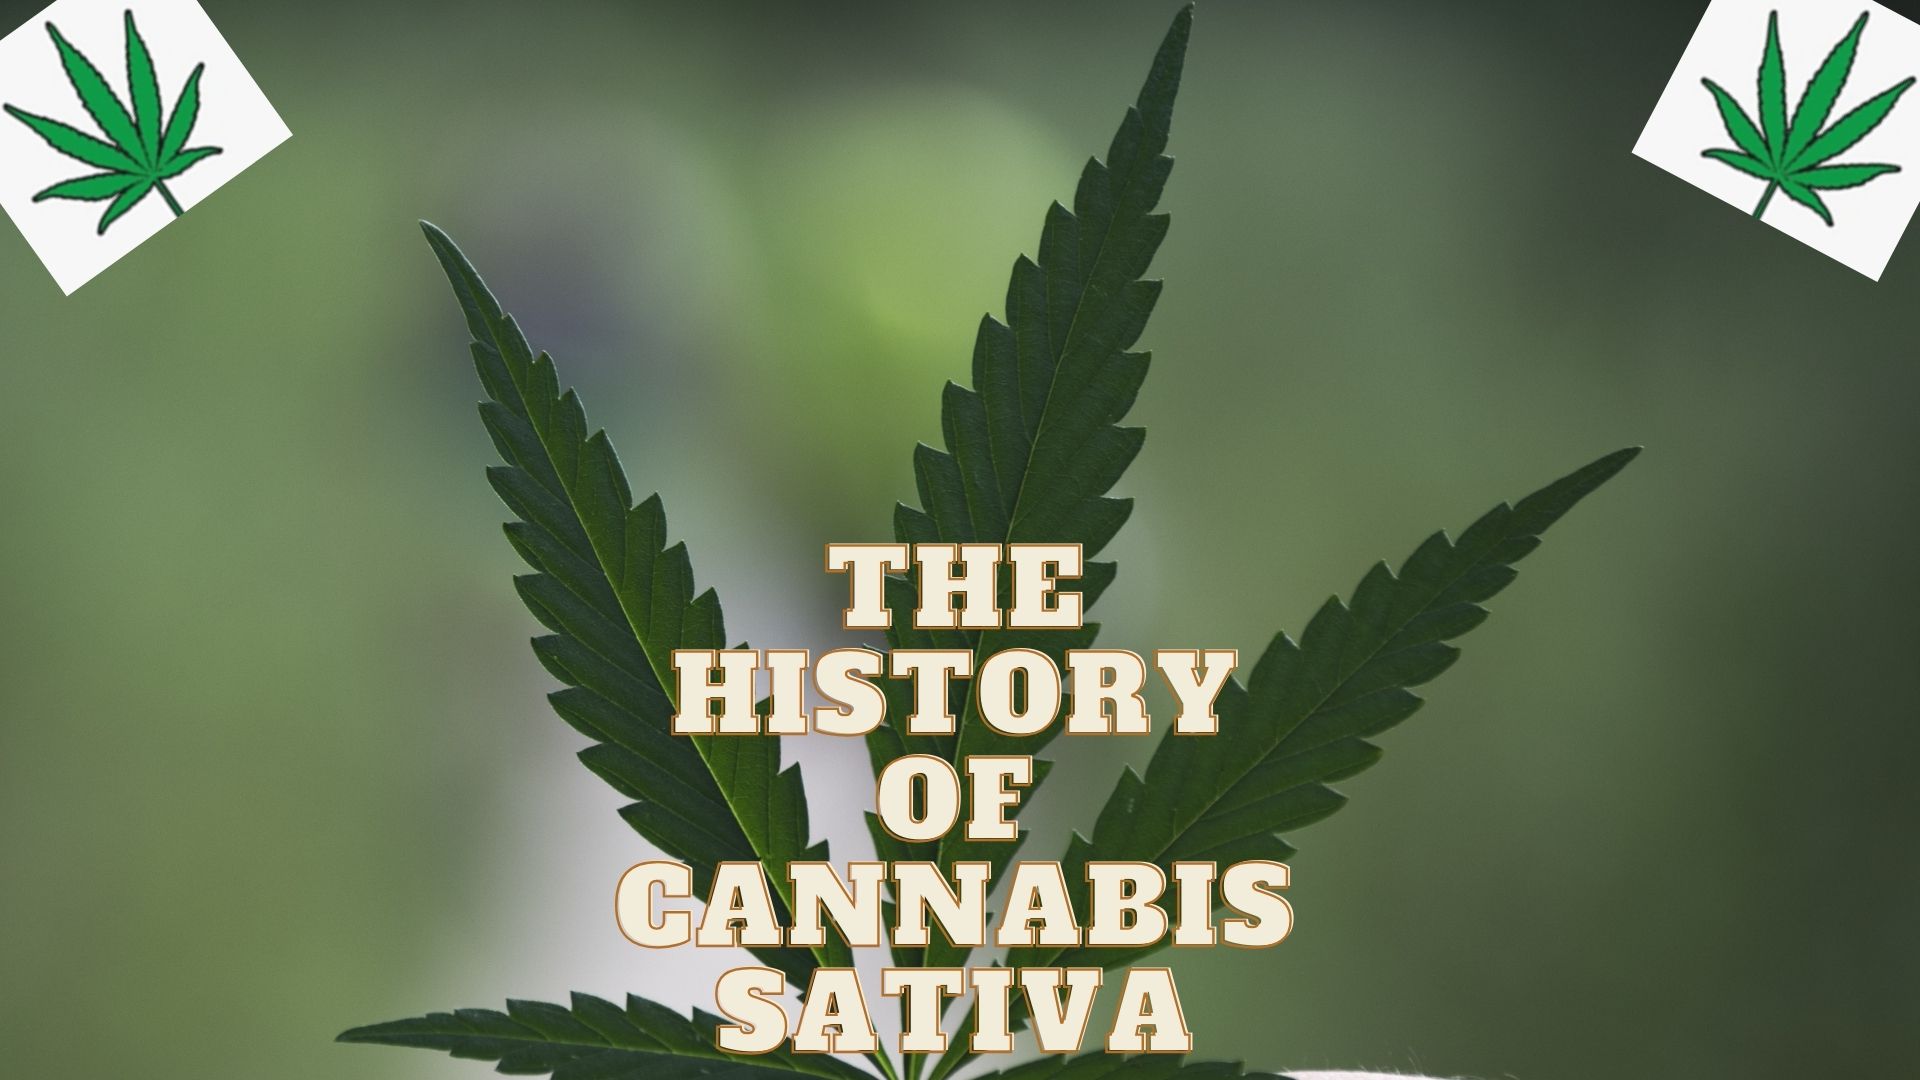 The HISTORY OF Cannabis sativa